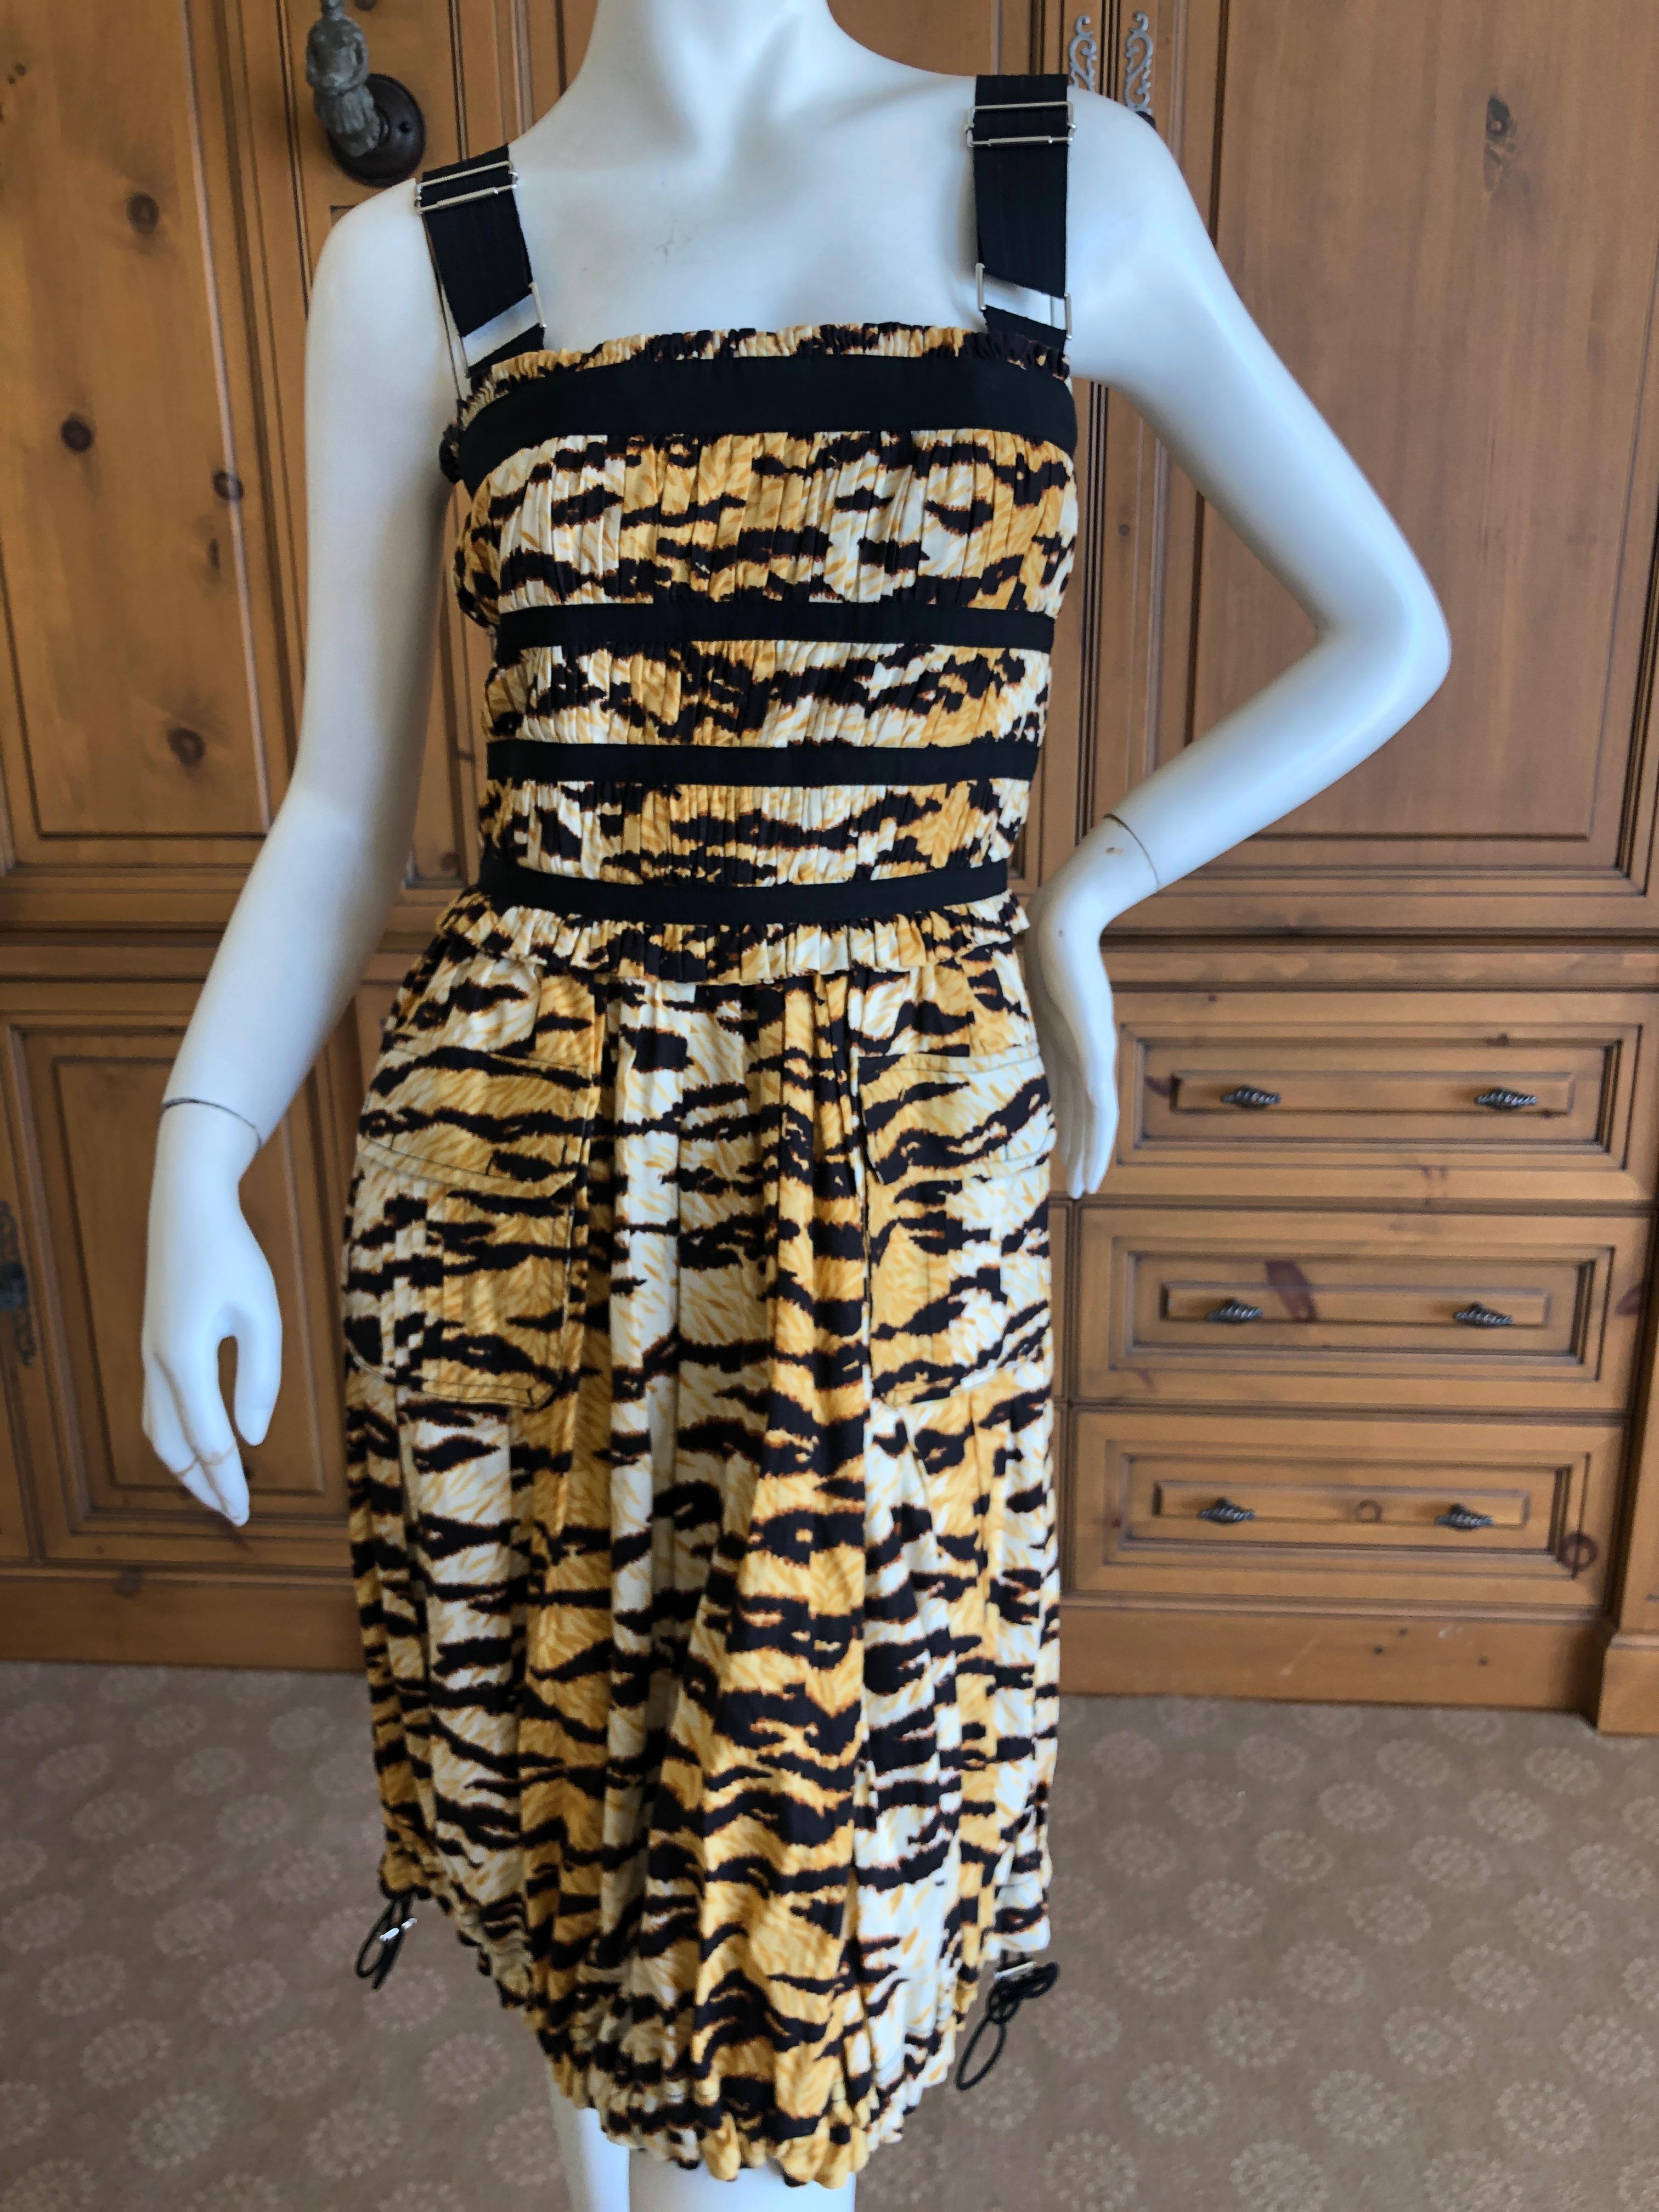 D&G Dolce & Gabbana Vintage Tiger Print Cotton Corset Dress
Marked size 40 , this runs small
Bust 34'
Waist 26